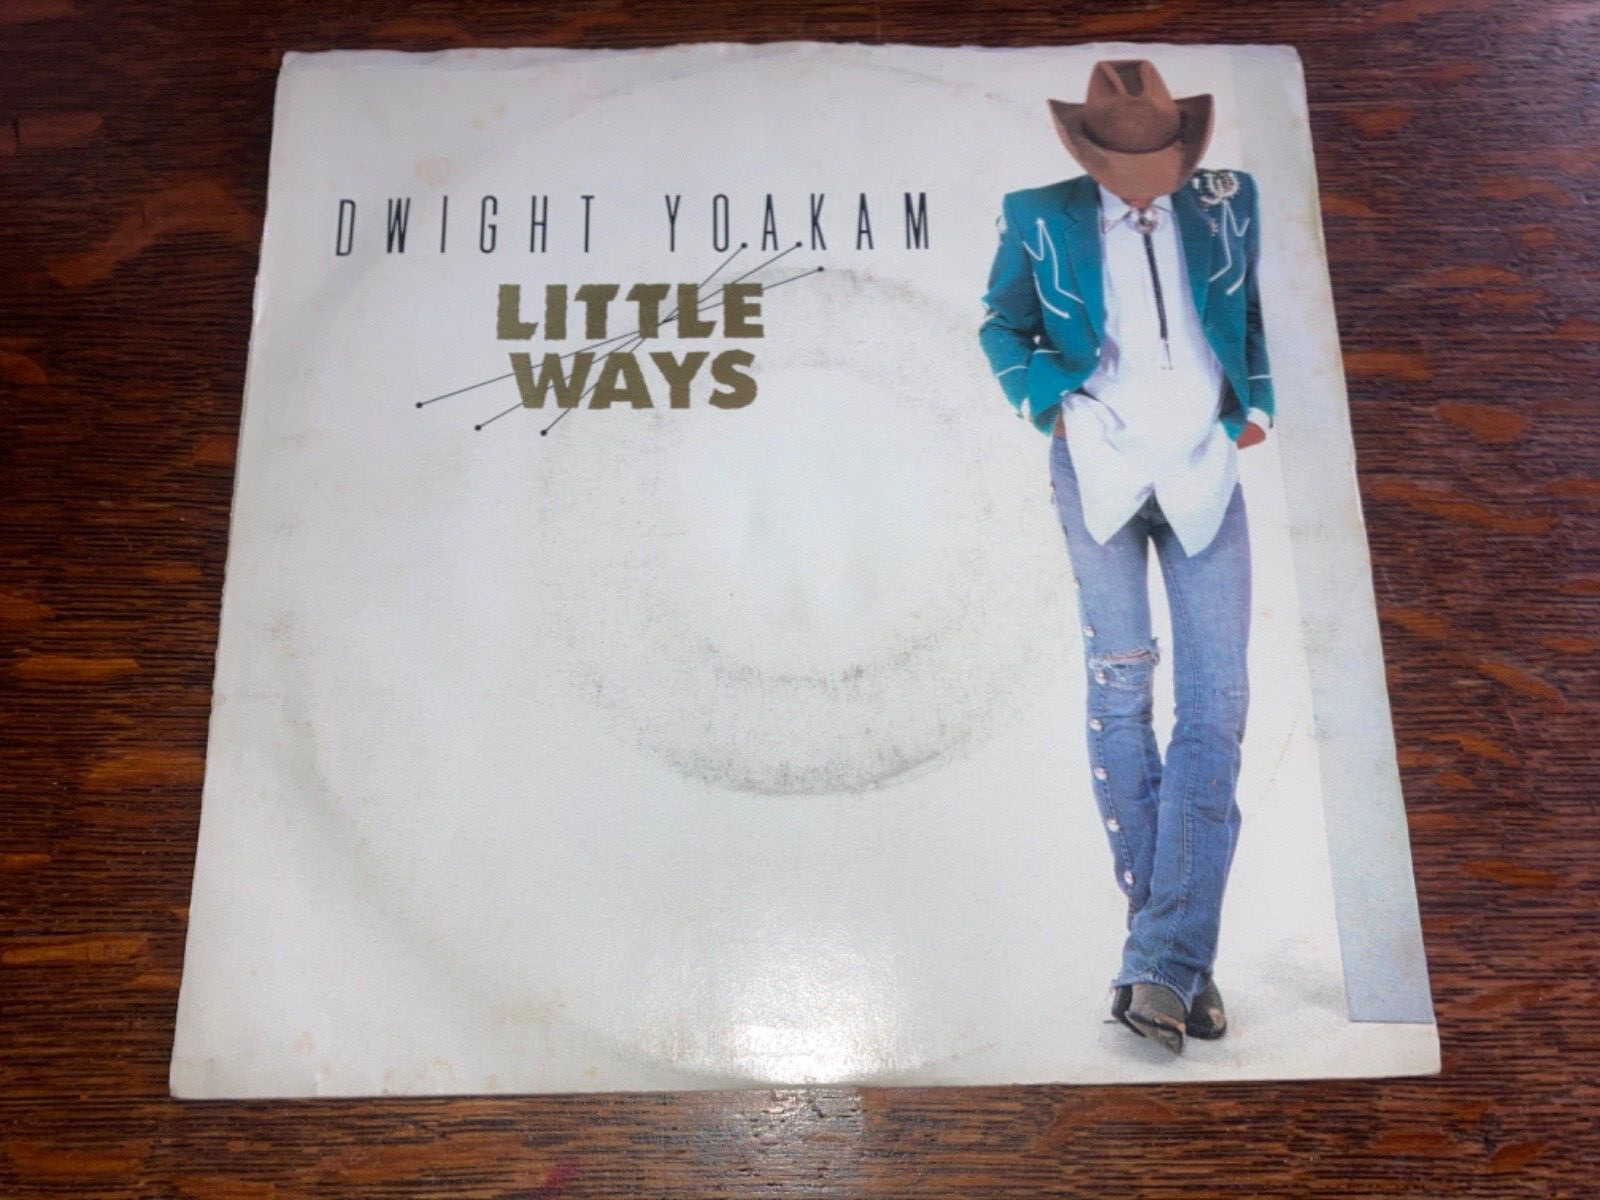 DWIGHT YOAKAM "Little Ways" US 1987 45 RPM 7" Reprise (7-28318) - EX+